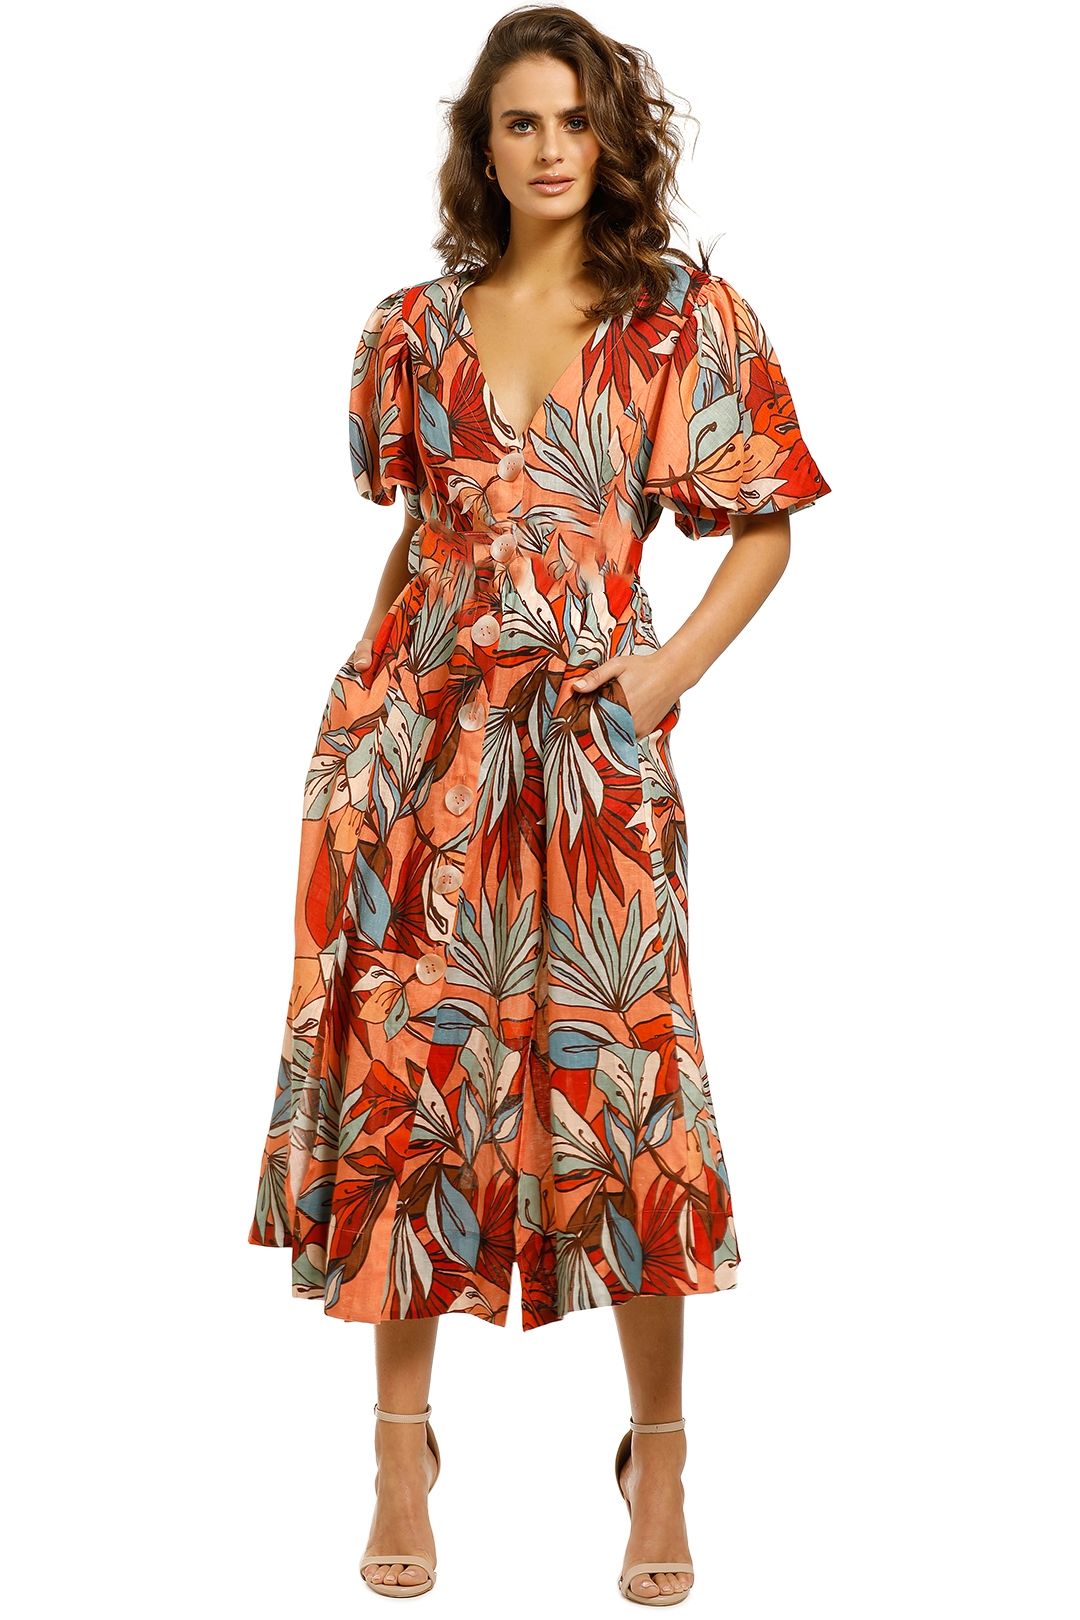 Troy Dress in Tarama Deco Floral by Nicholas for Rent | GlamCorner